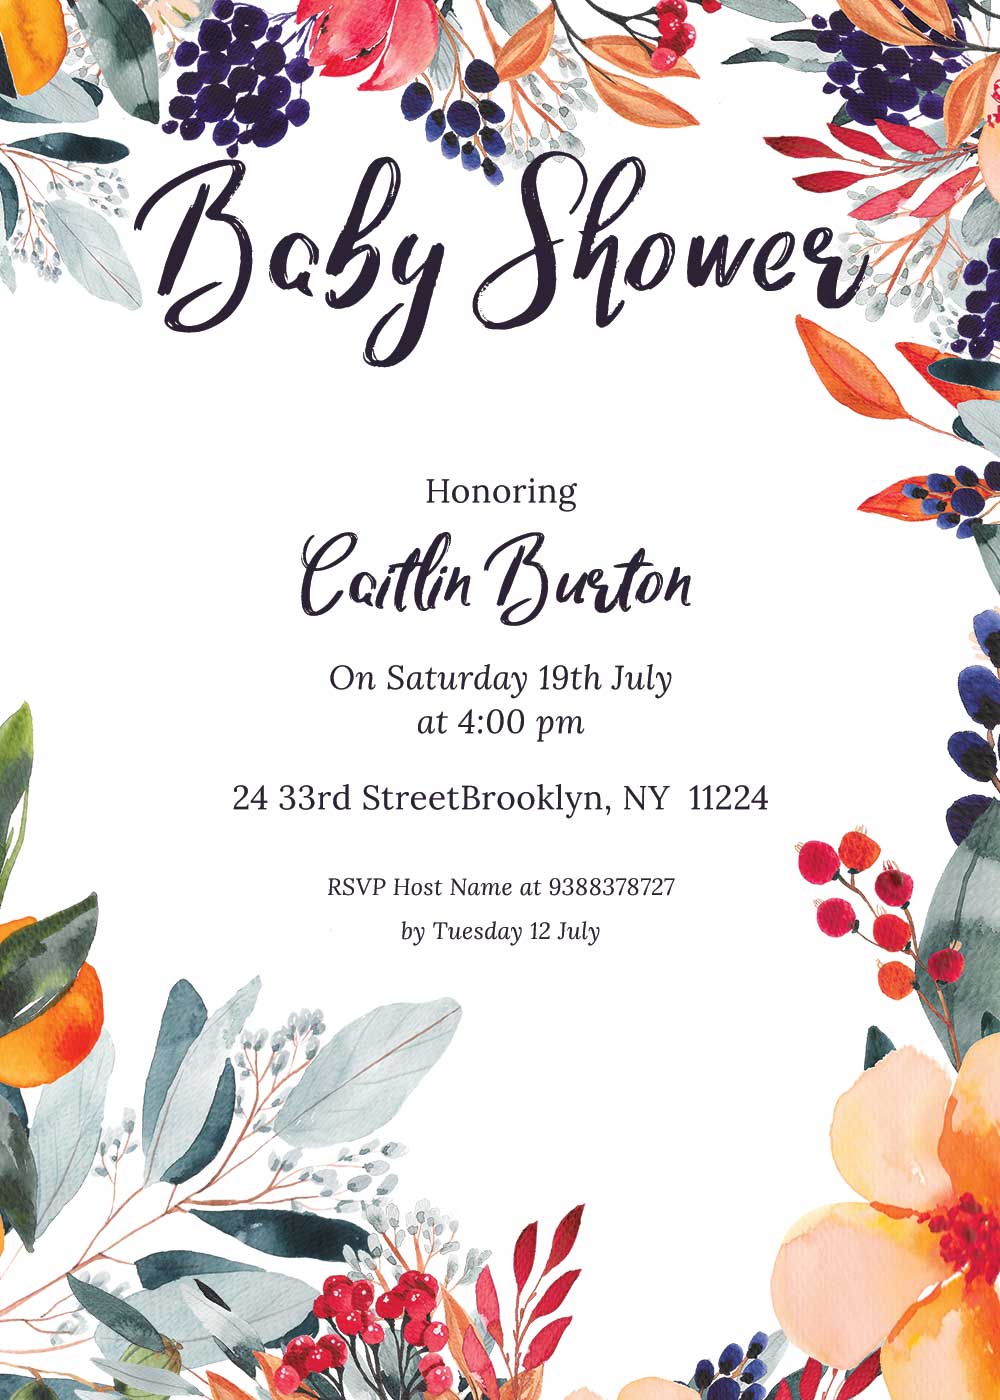 Baby shower invitations - Summer theme